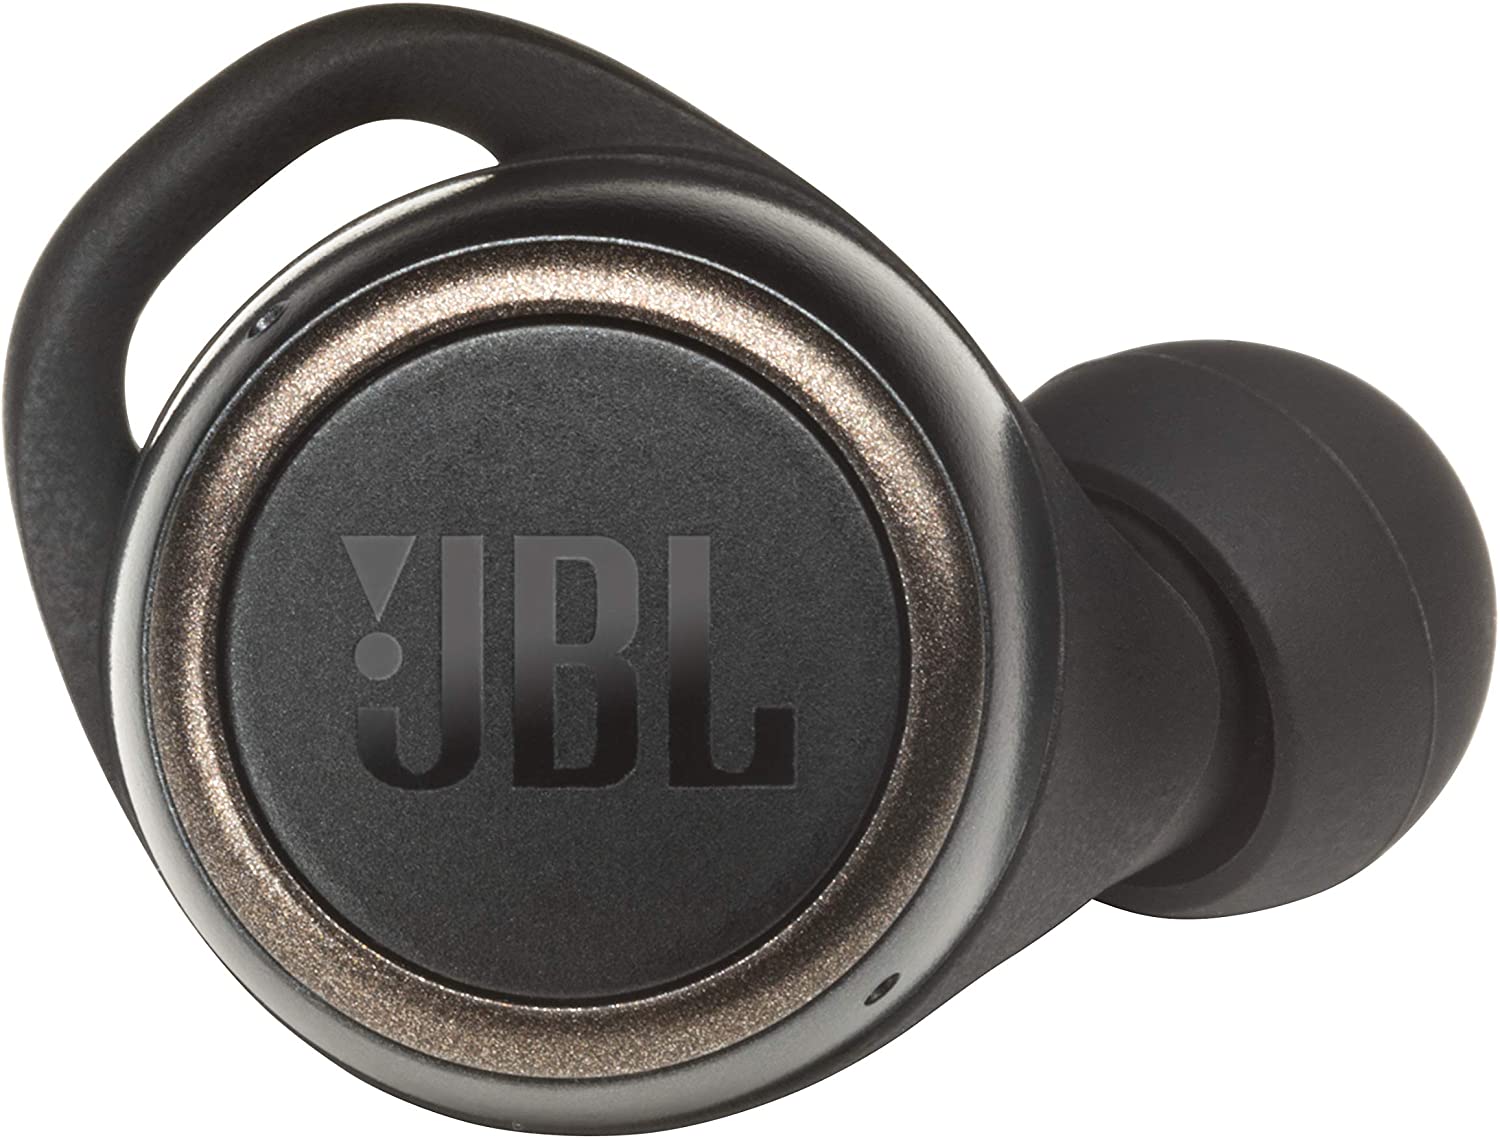 JBL Live300 TWS,JBL,IPX5,true wireless,หูฟังไร้สาย,JBL Signature Sound,Earwings,Voice Assistant